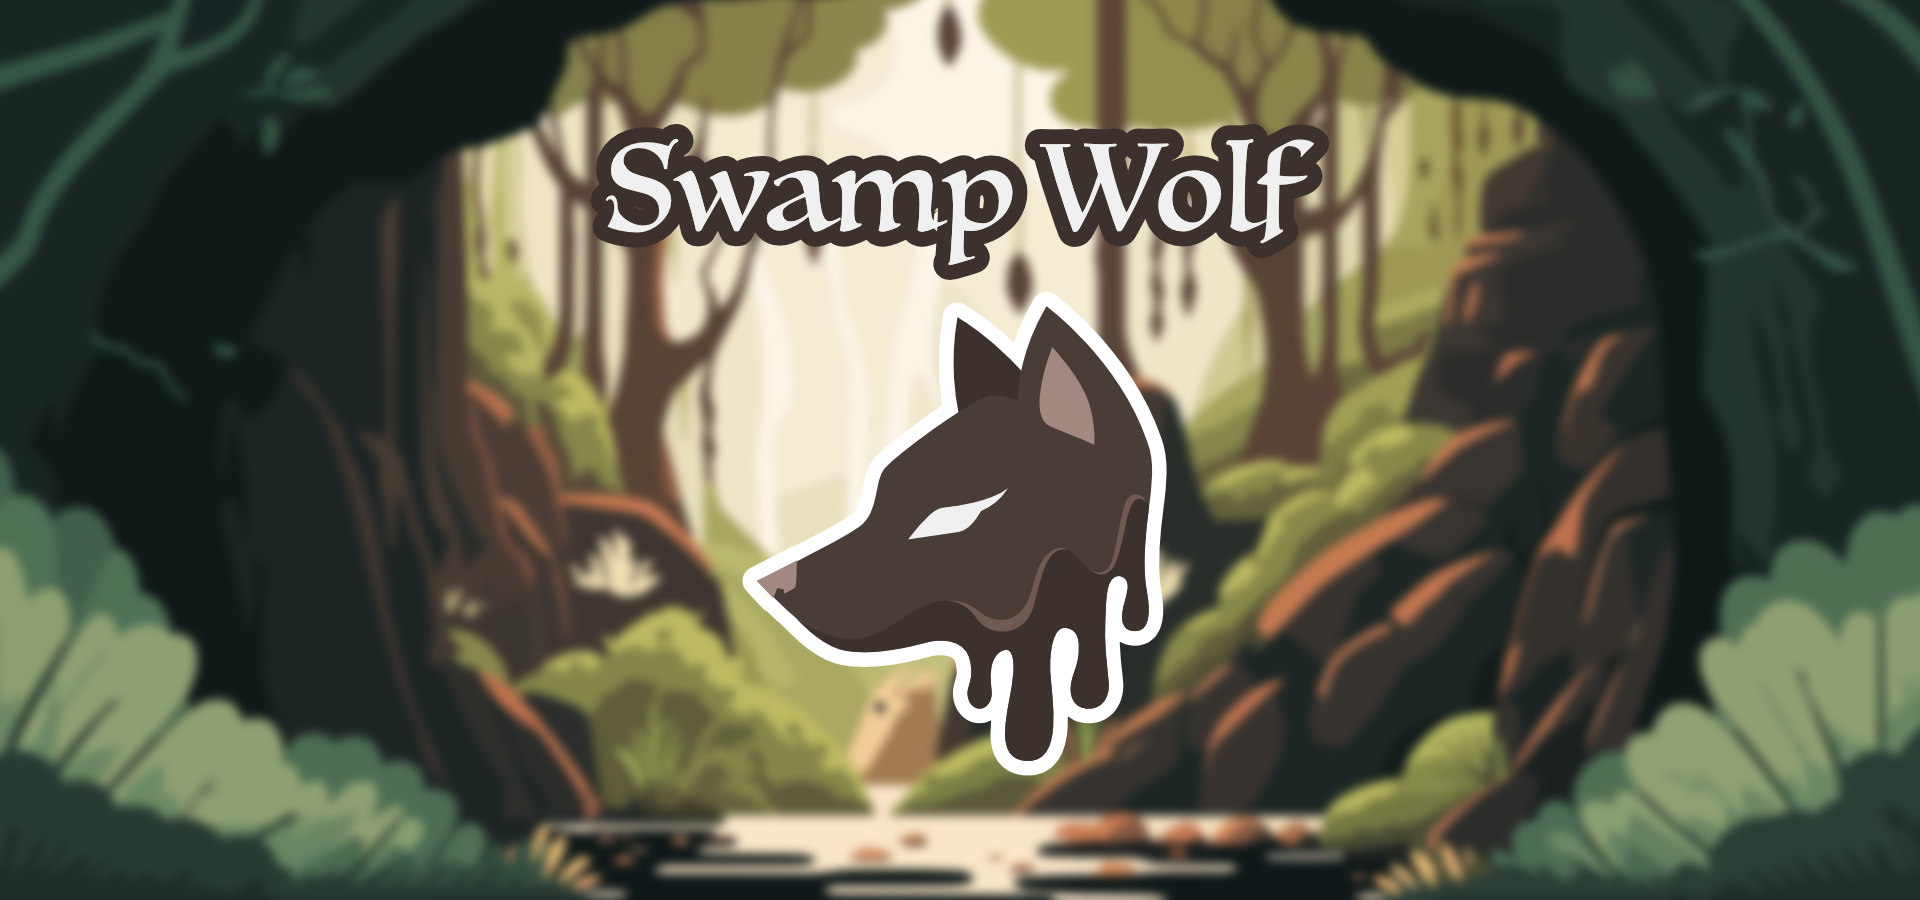 Swamp wolf